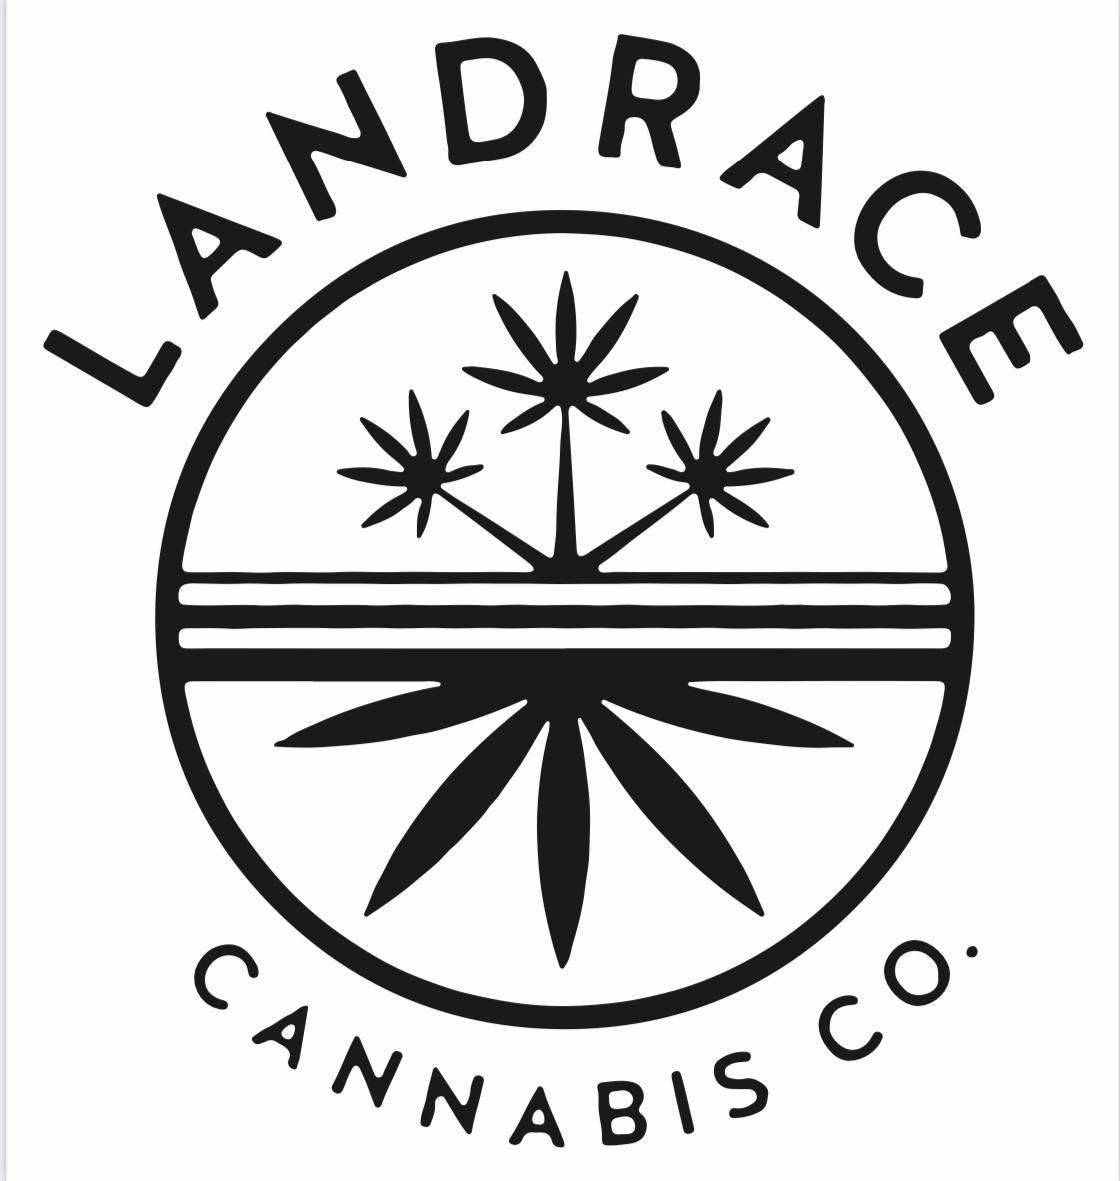 Landrace Cannabis Co - Recreational